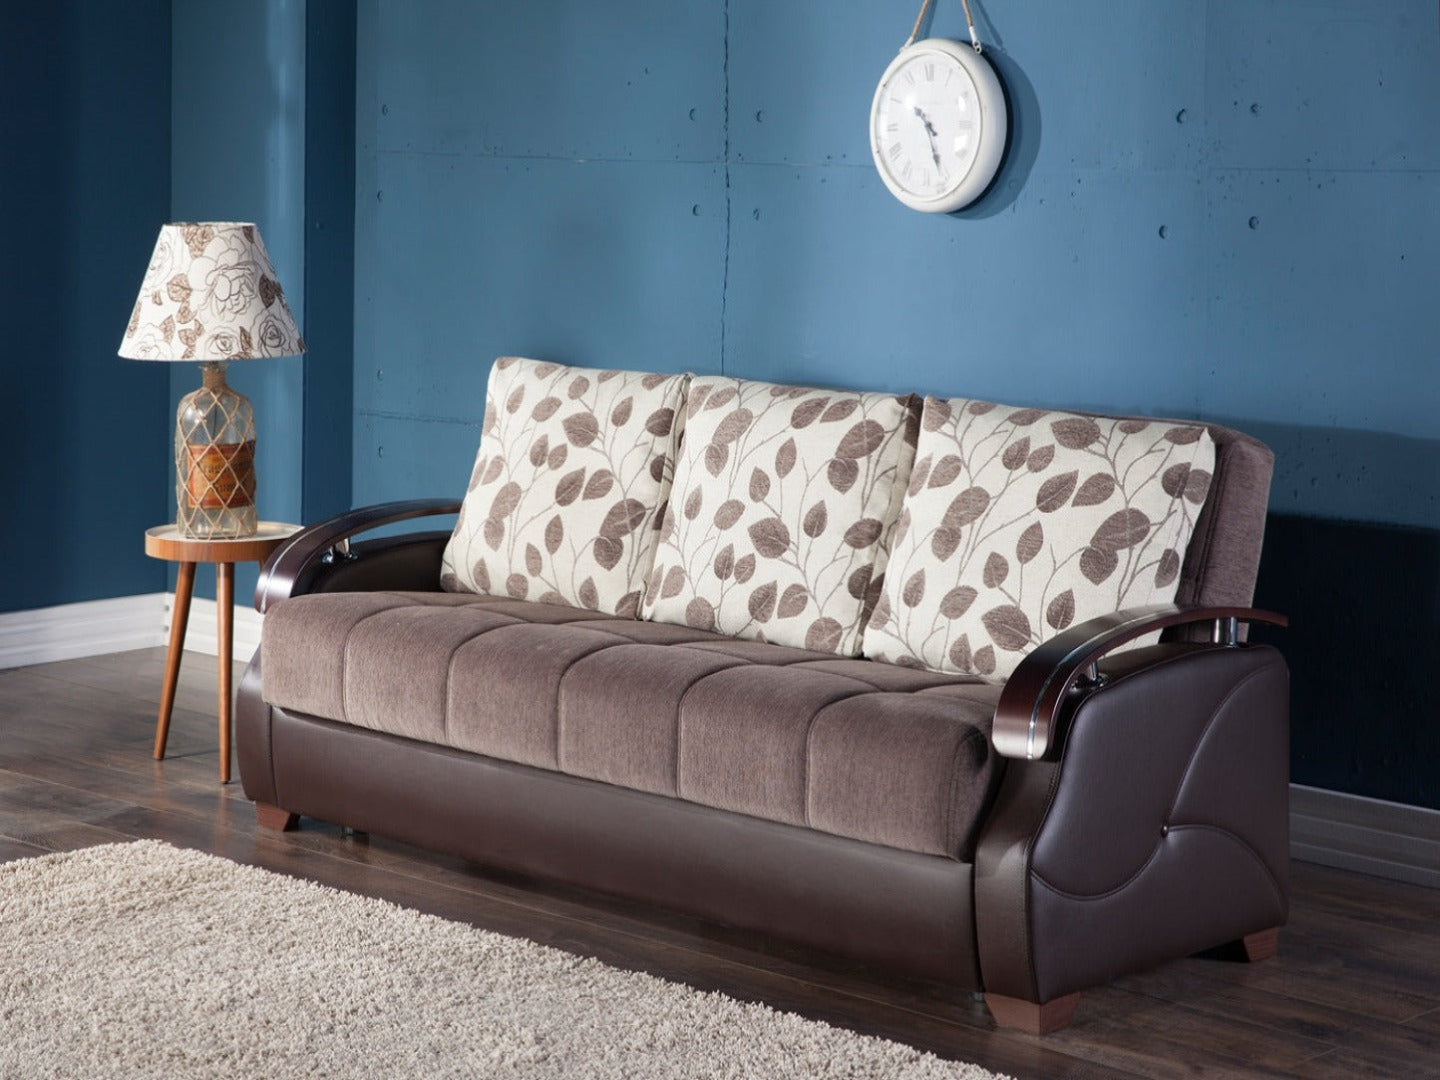 Elita Multifunctional Livingroom Sleeper Convertible Sofa Bed by Bellona –  Bellona USA